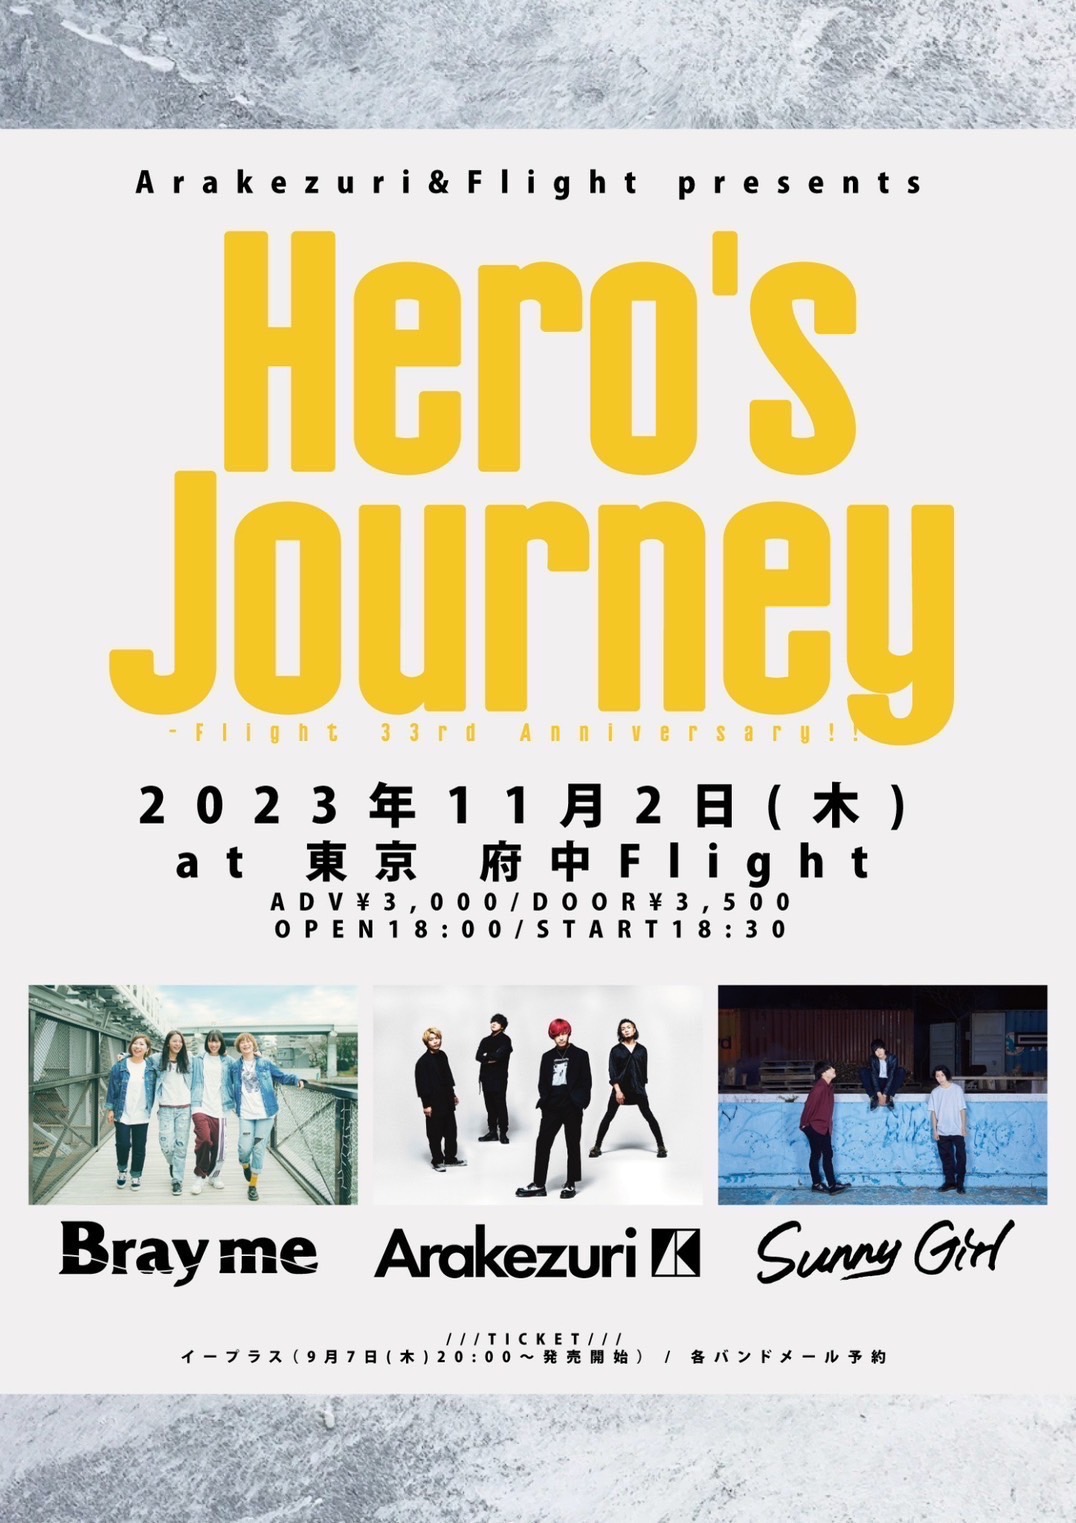 Arakezuri&Flight presents Hero’s Journey -Flight 33rd Anniversary!!-